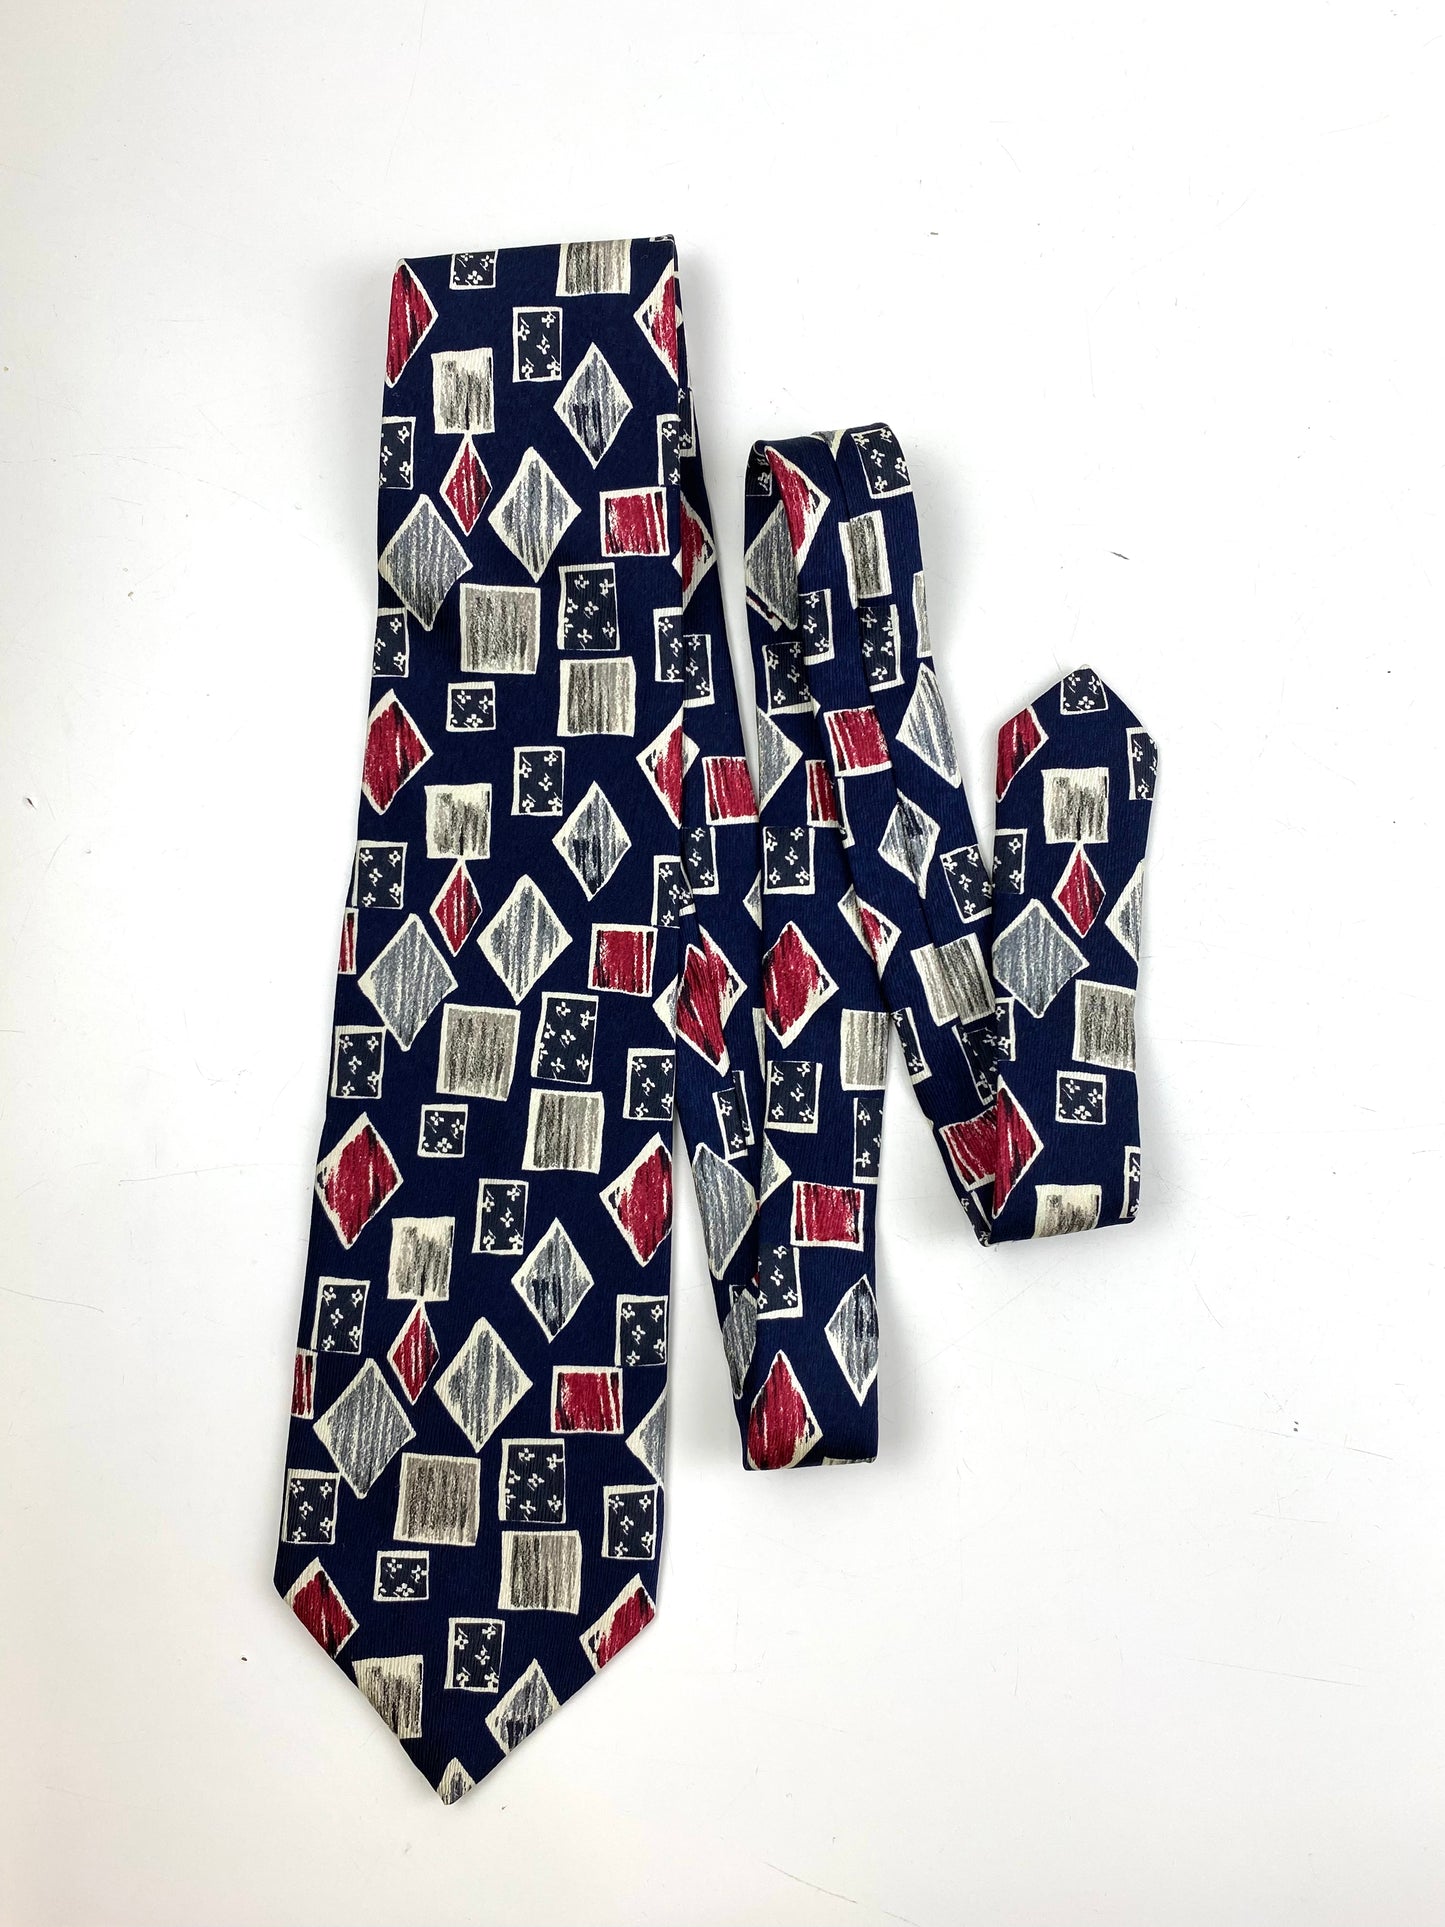 90s Deadstock Silk Necktie, Men's Vintage Navy Tie With Red/ Grey Diamond & Square Pattern, NOS